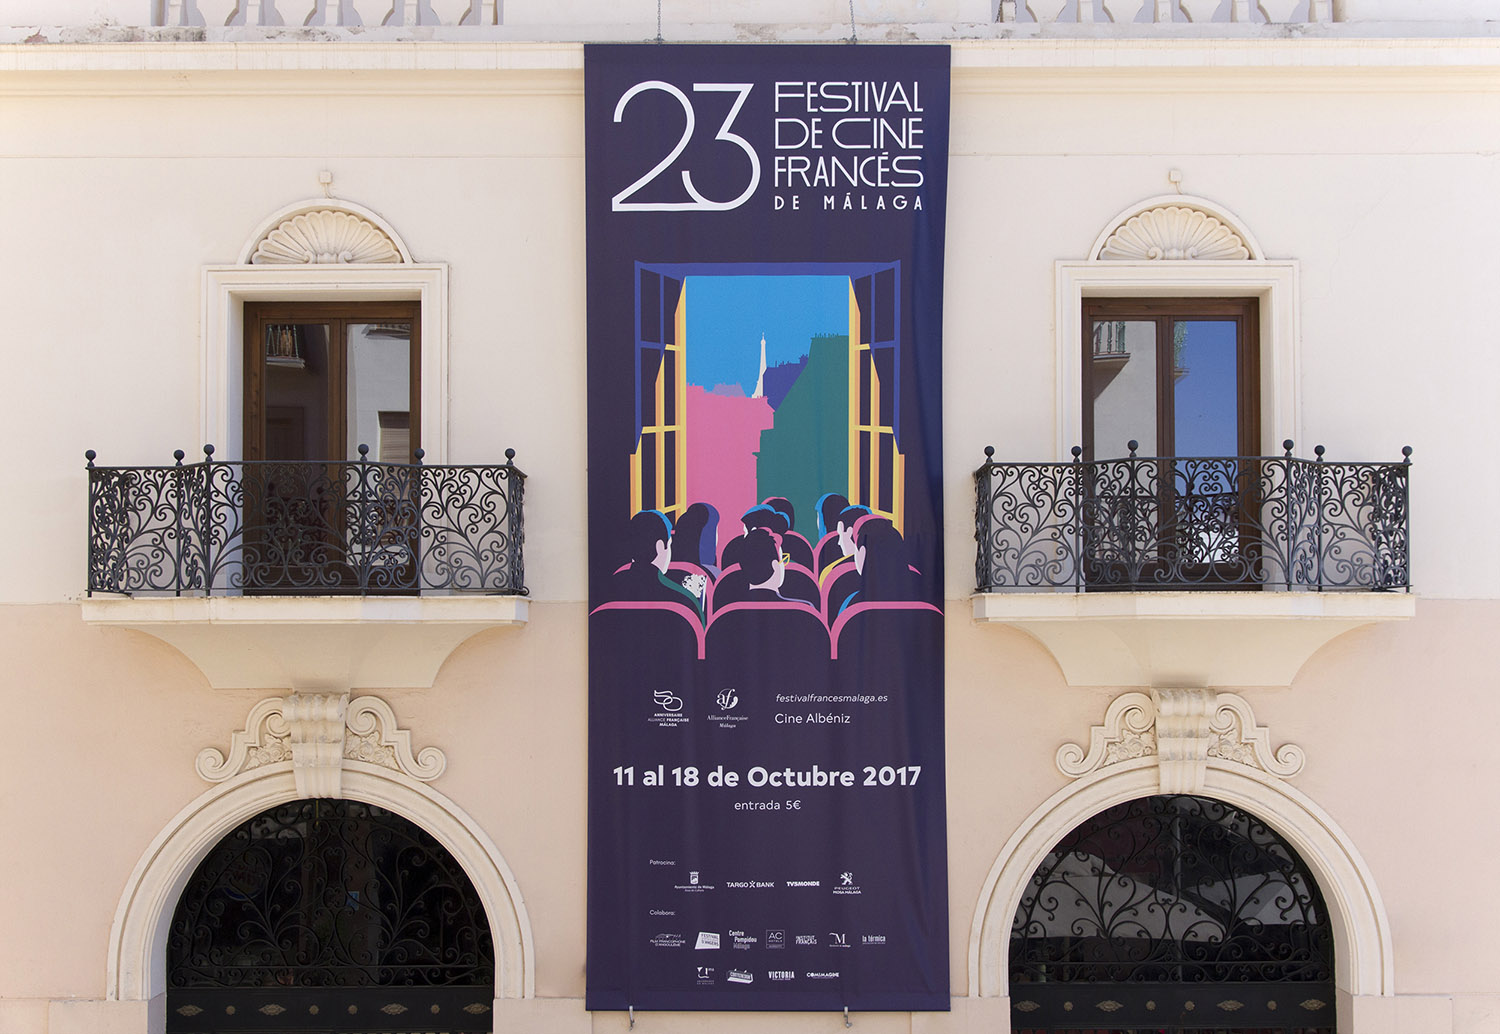 23 Festival de Cine Francés de Málaga by Estudio Santa Rita - Creative Work - $i